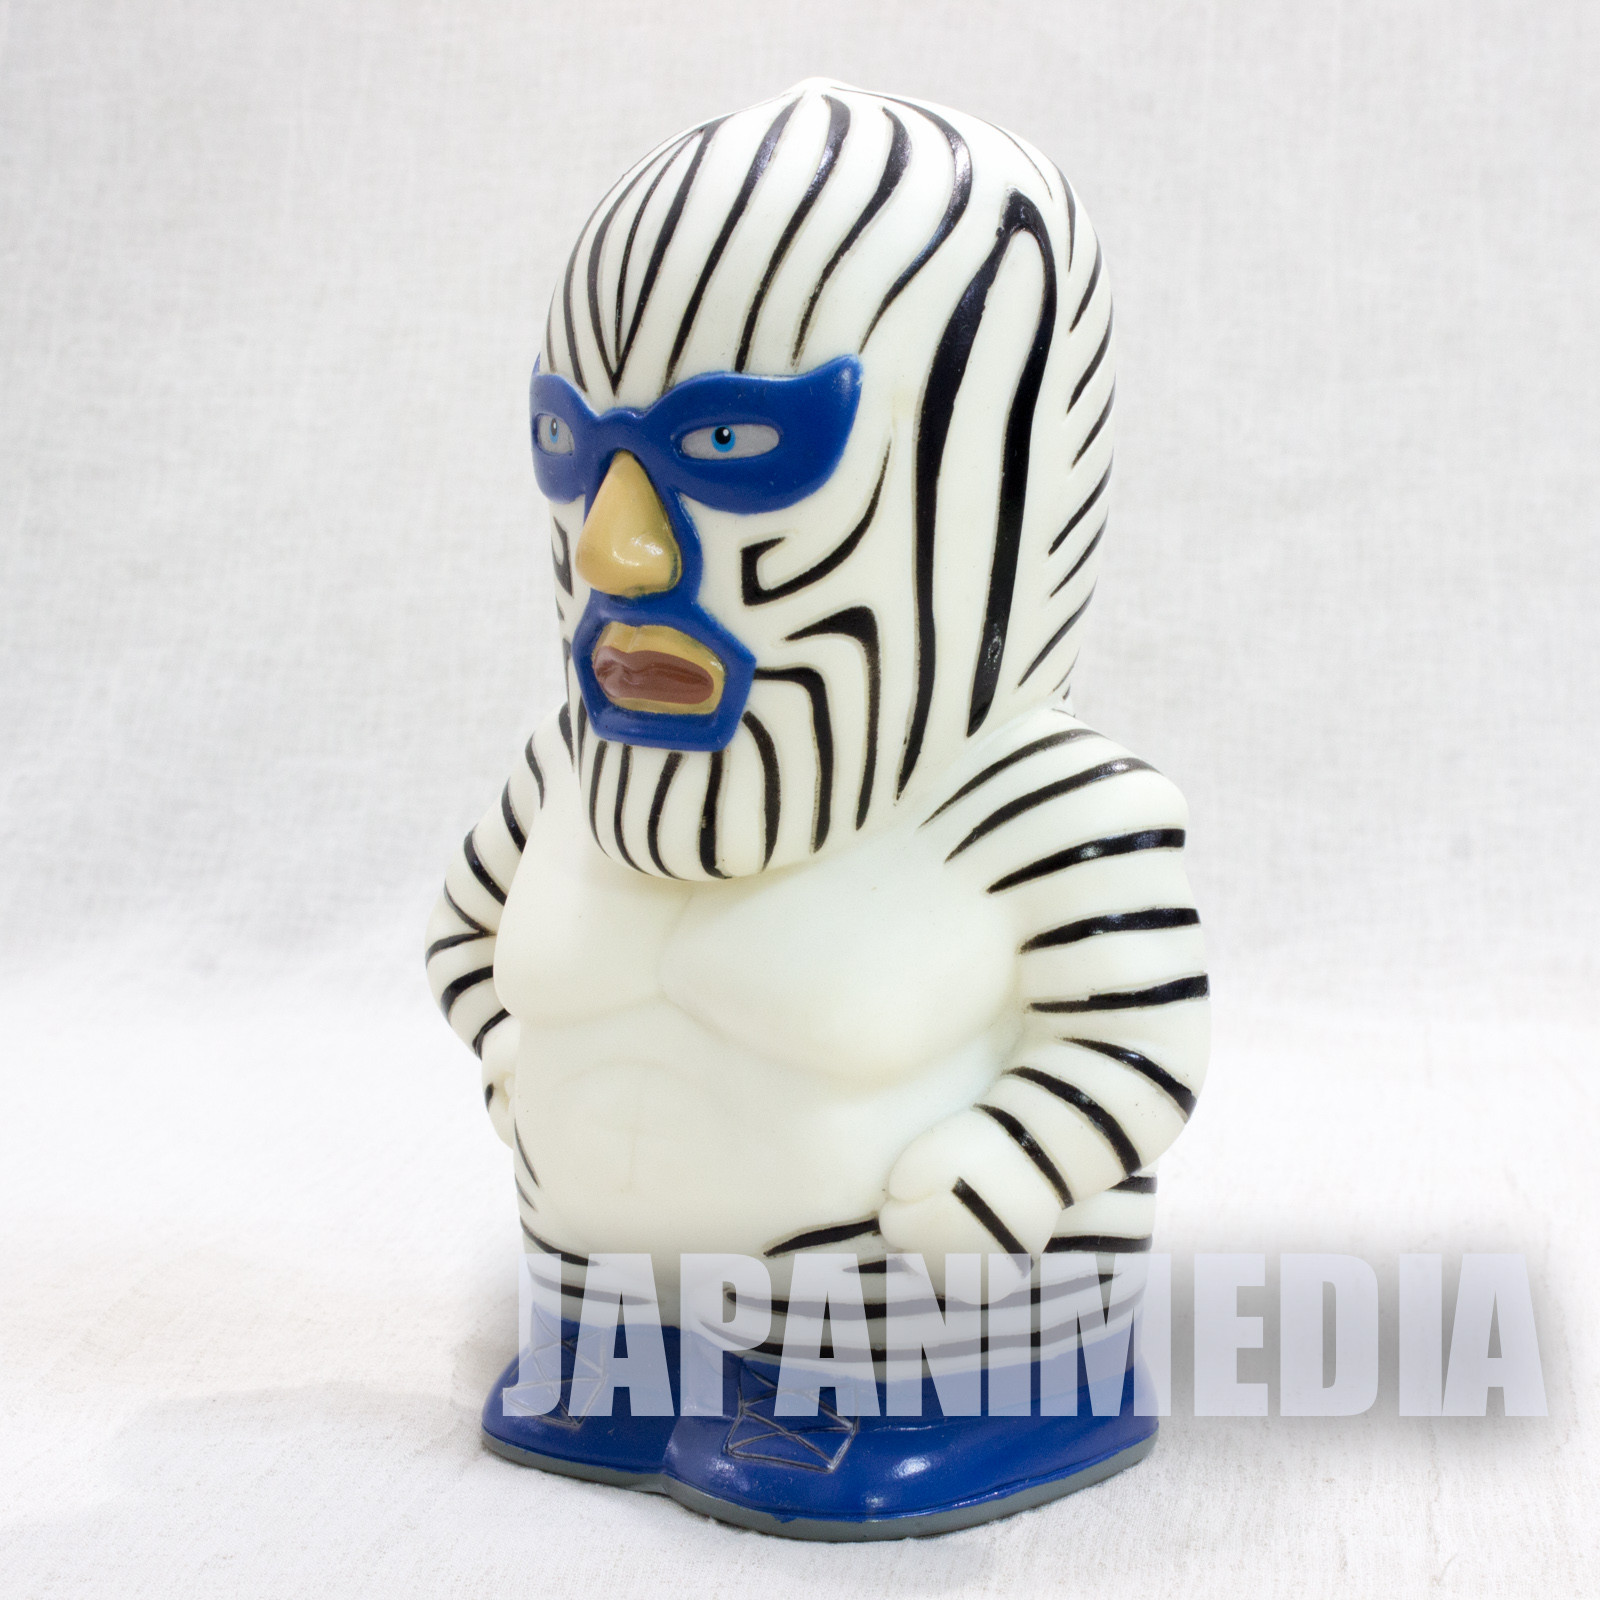 Tiger Mask Zebraman Soft Vinyl Figure Coin Bank JAPAN ANIME MANGA Pro Wrestling